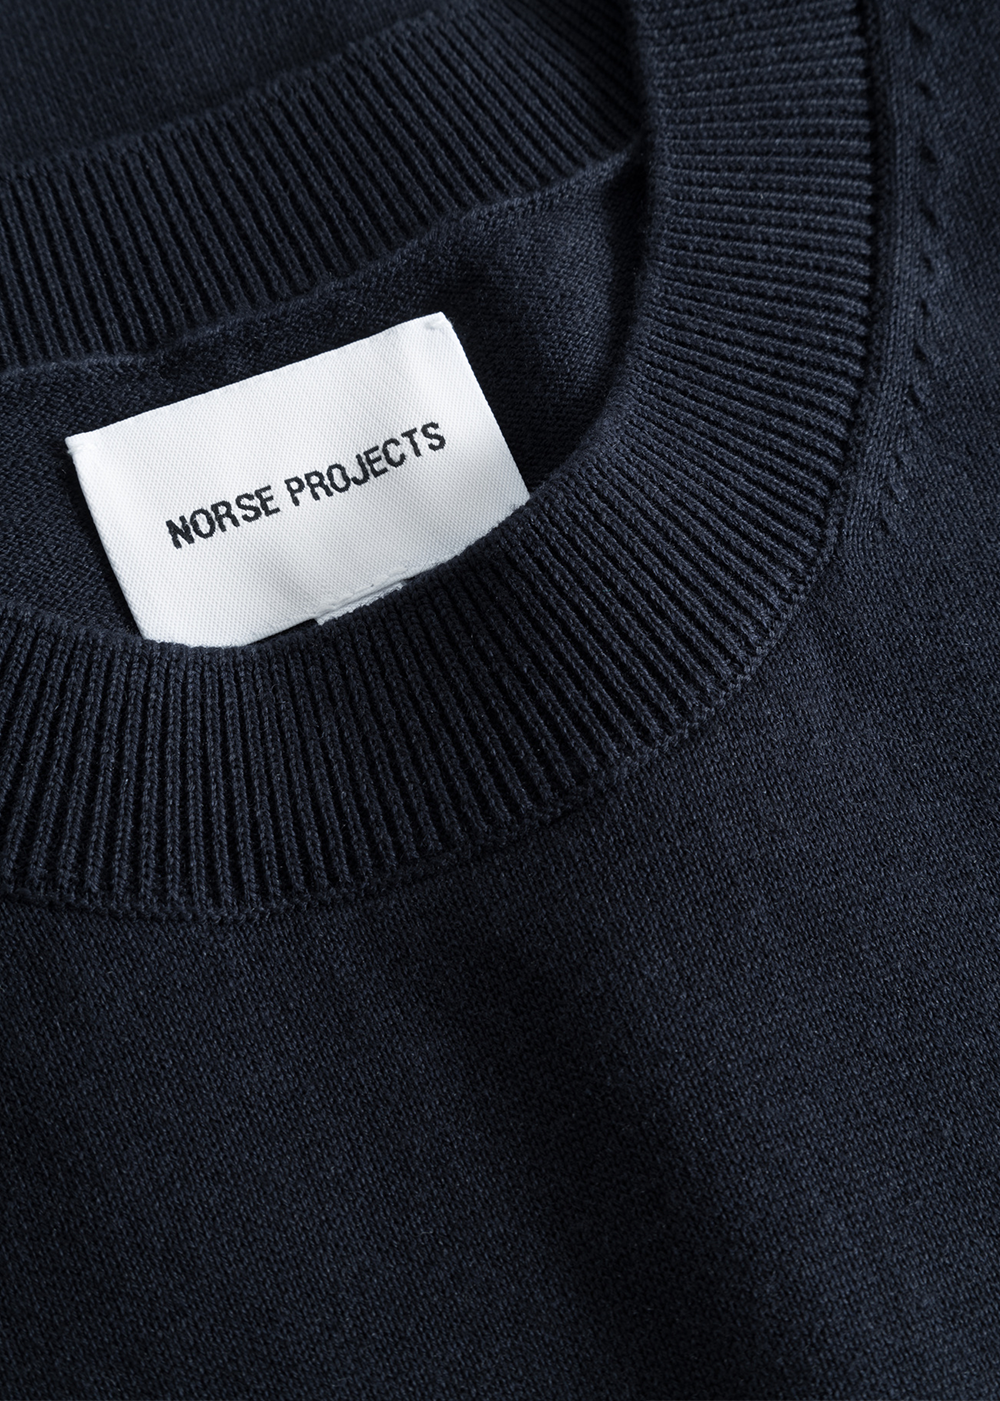 Rhys Cotton Linen T-Shirt - Dark Navy - Norse Projects Canada - Danali